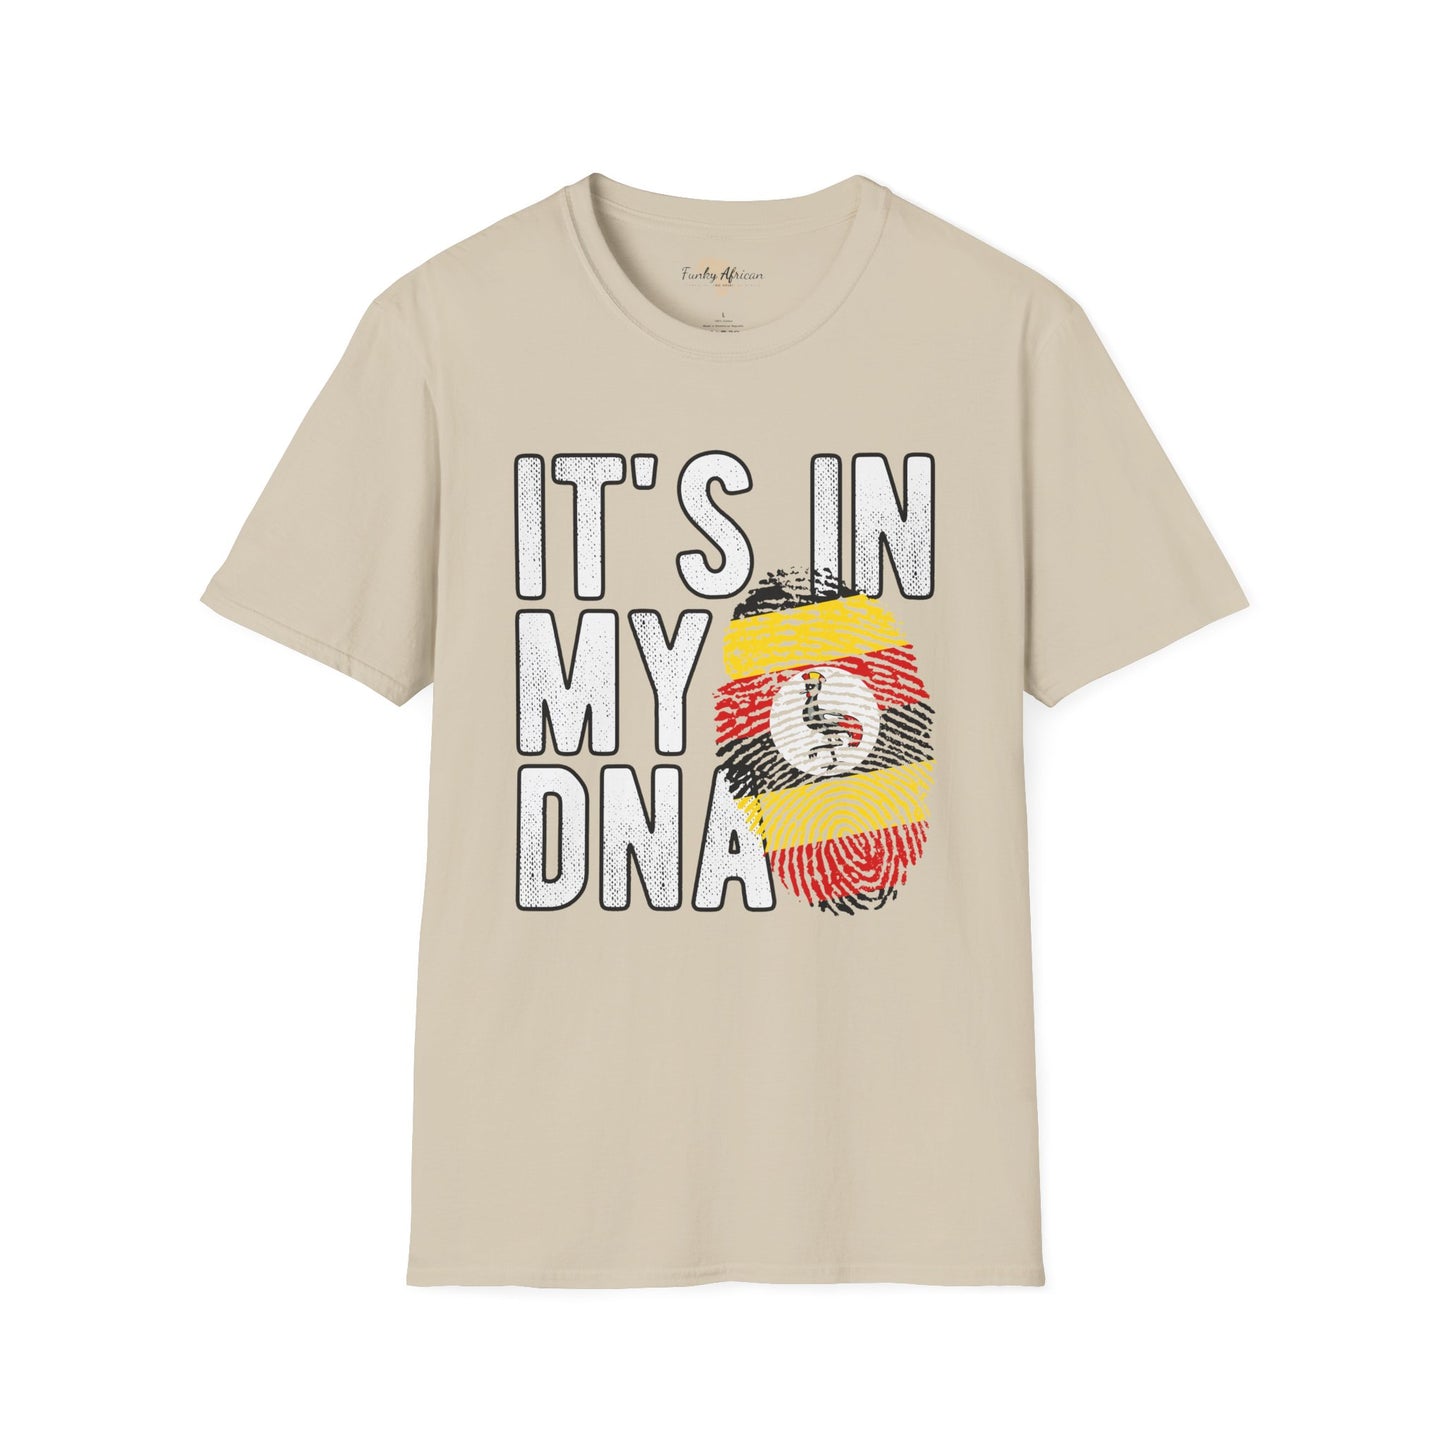 it's in my DNA unisex tee - Uganda